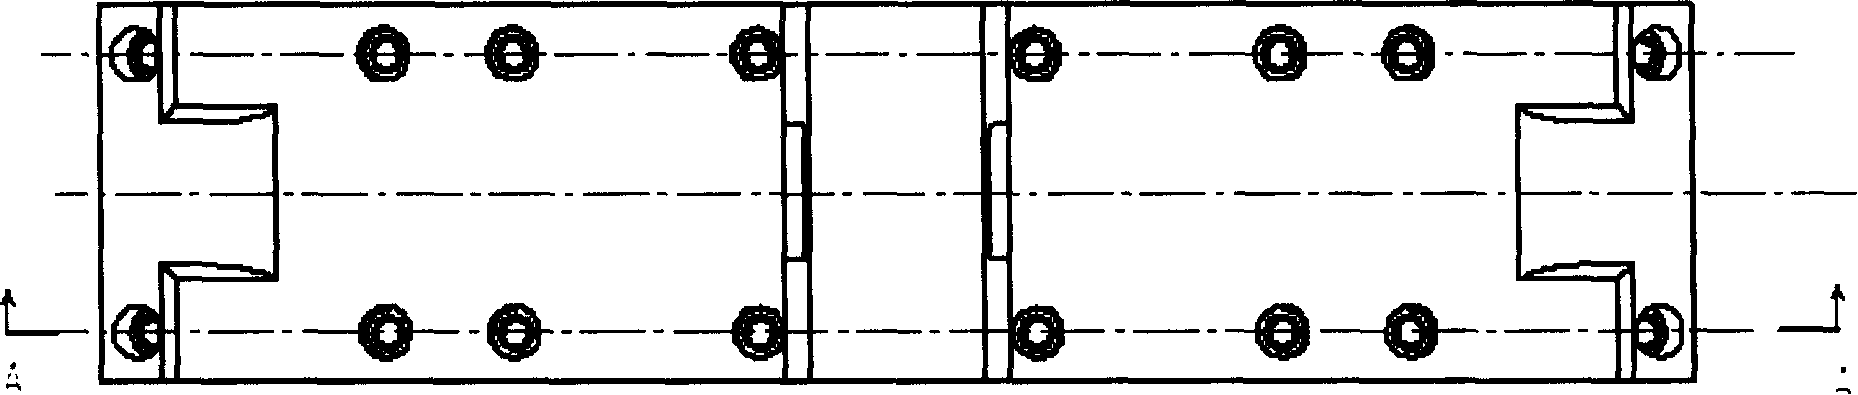 Freight car compartment powder metallurgy brake block